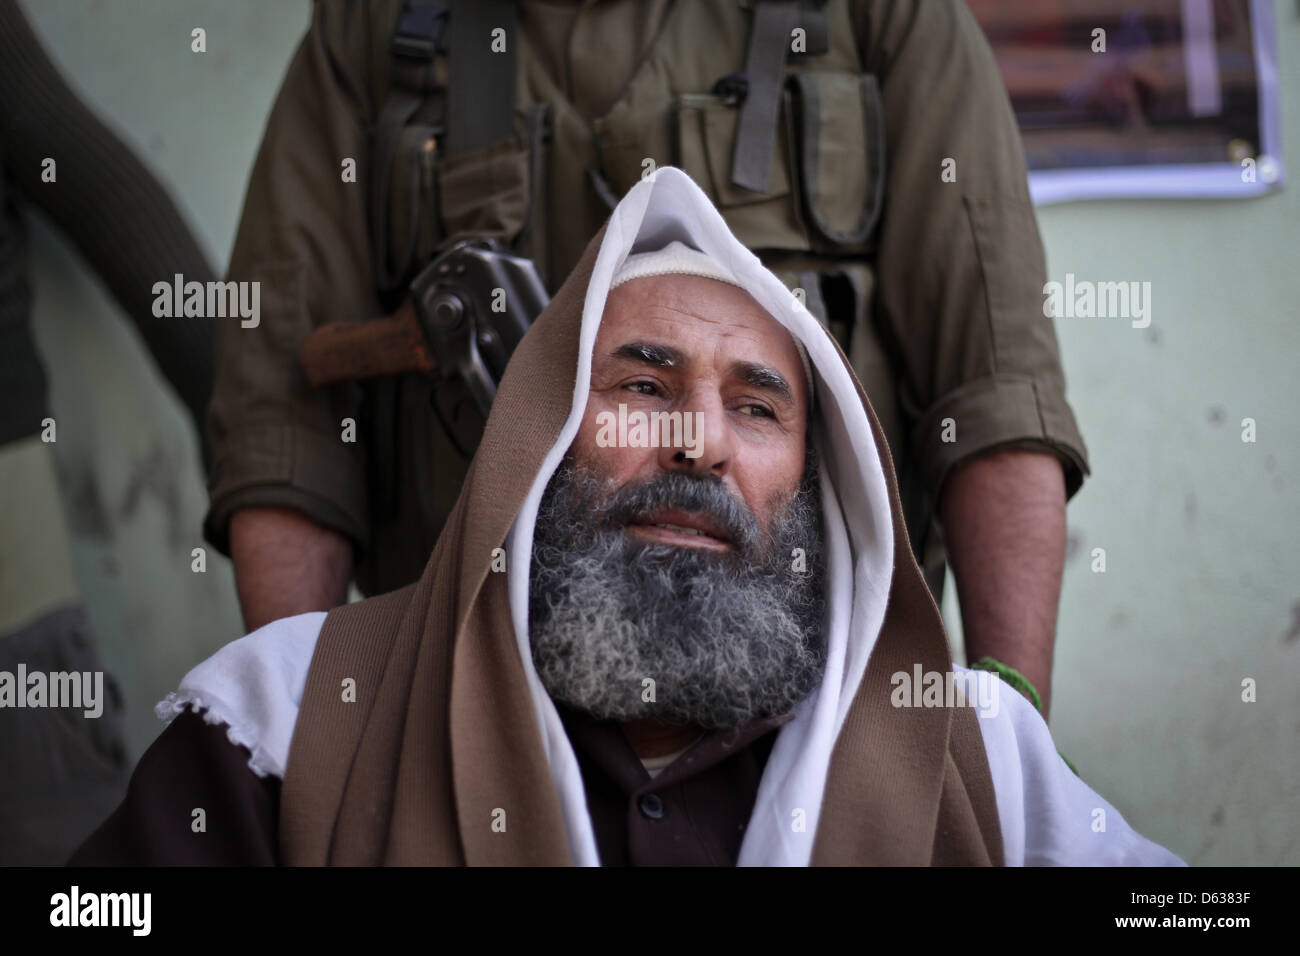 Gaza strip, Gaza City. 11th April 2013. A Palestinian man dressed